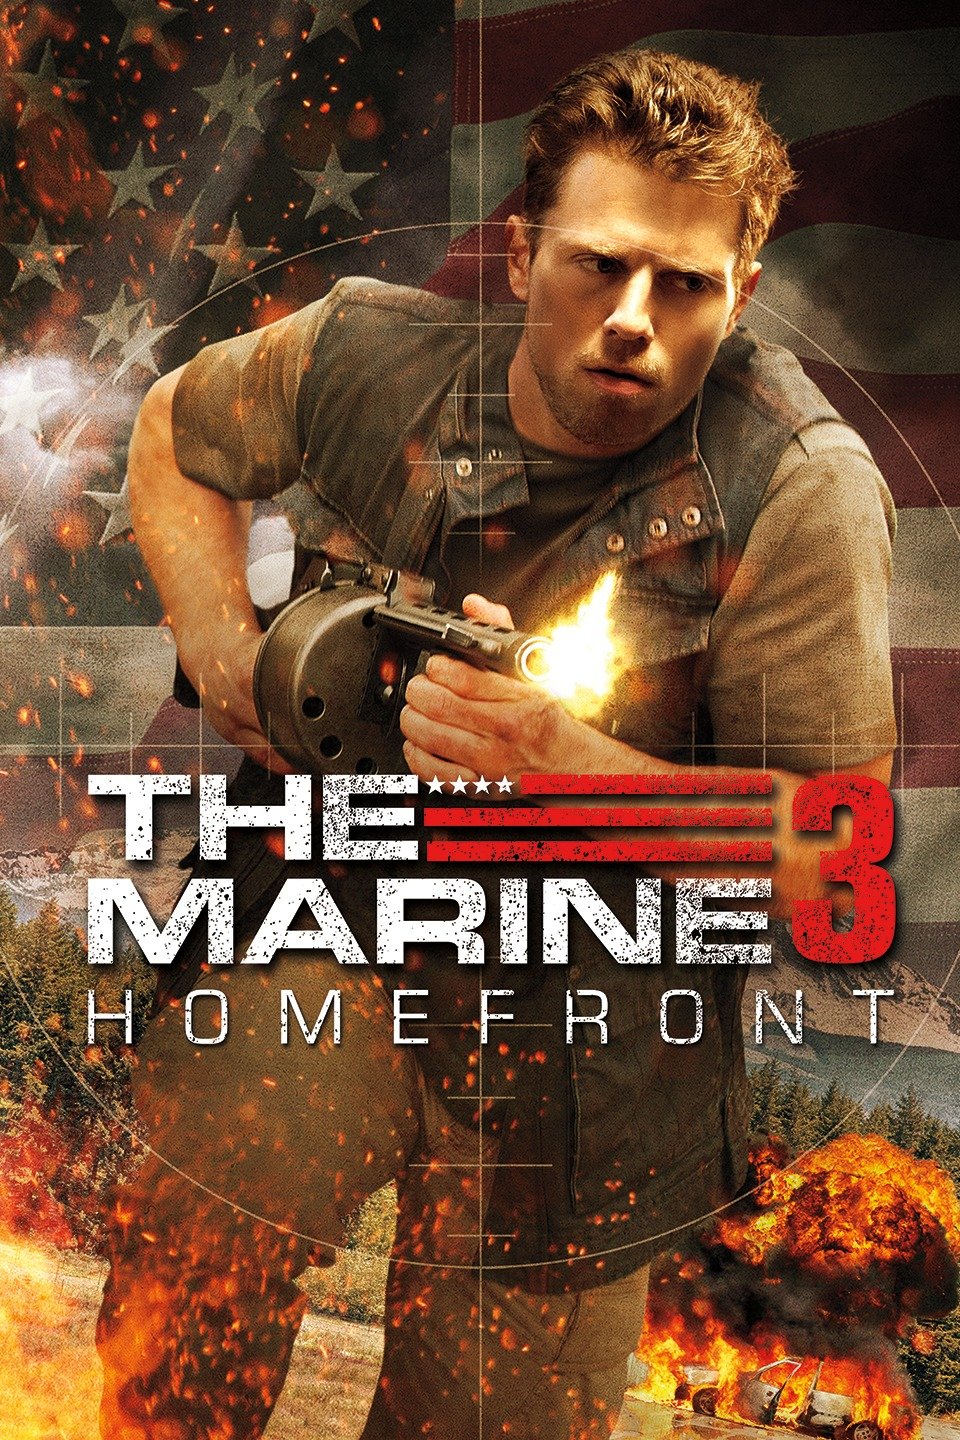 [MINI-HD] The Marine 3 (2013) เดอะ มารีน คนคลั่งล่าทะลุสุดขีดนรก ภาค 3 [1080p] [พากย์ไทย 5.1 + เสียงอังกฤษ DTS] [บรรยายไทย + อังกฤษ] [เสียงไทย + ซับไทย] [ONE2UP]